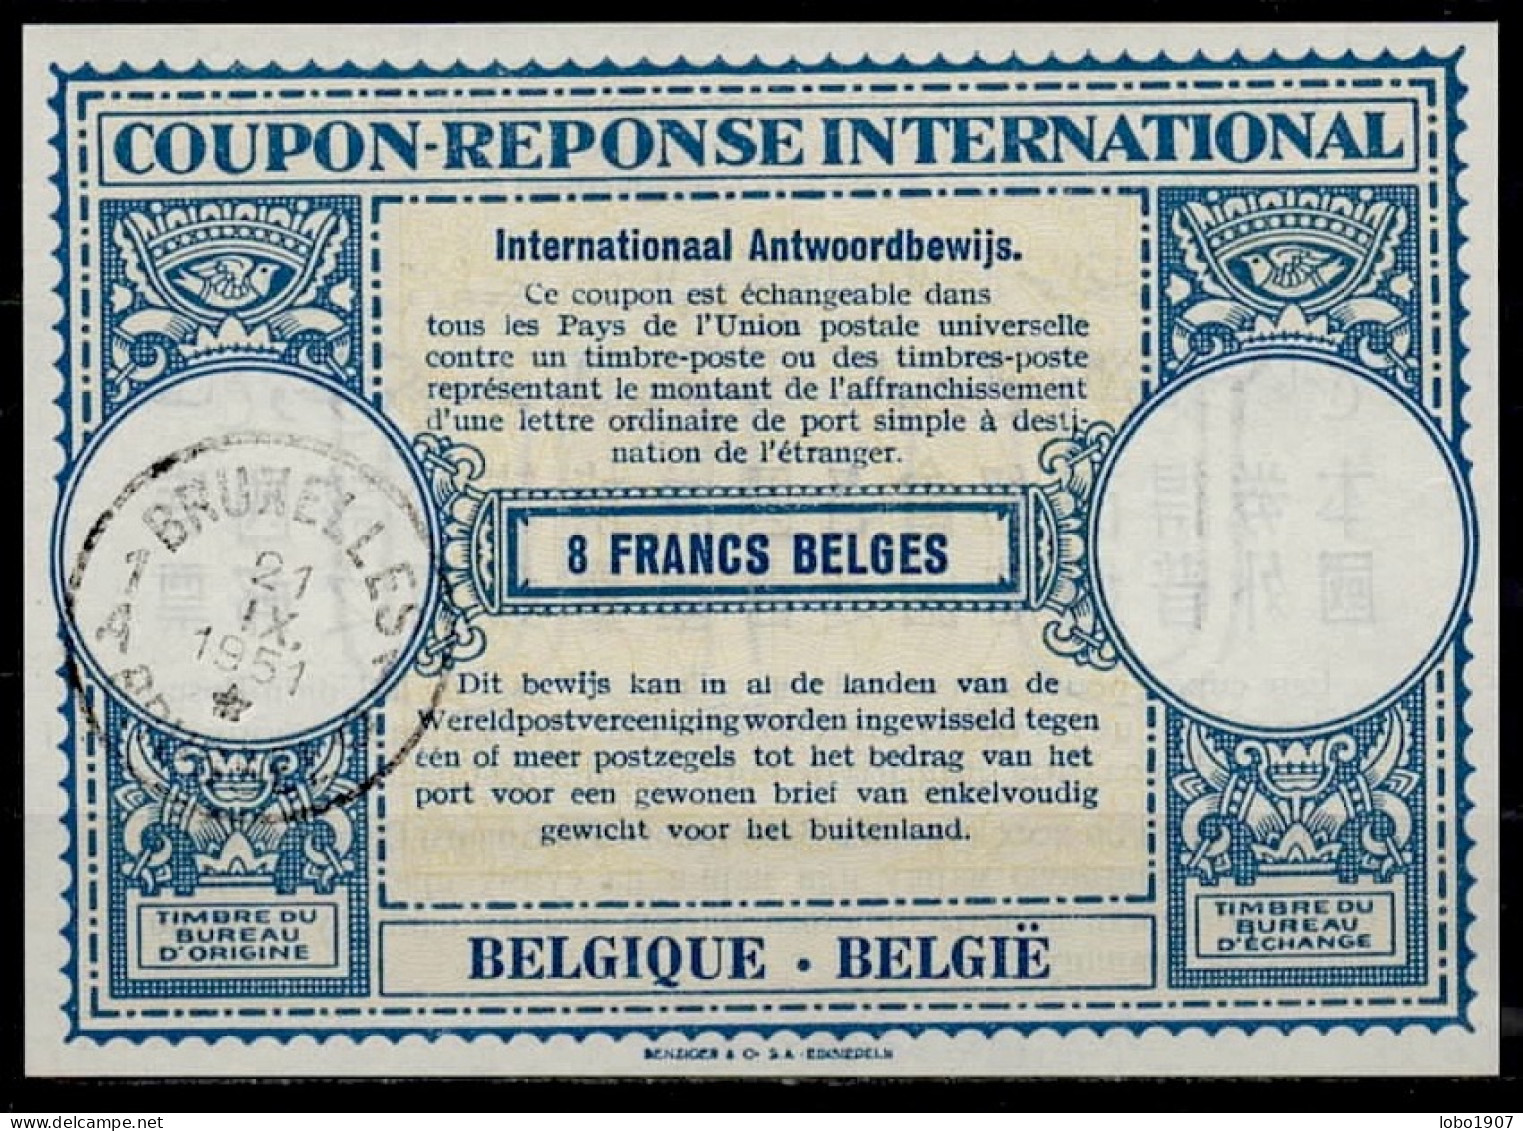 BELGIQUE BELGIE BELGIUM 1951, Lo15  8 FRANCS BELGES International Reply Coupon Reponse Antwortschein IAS IRC  O BRUXELLE - Buoni Risposta Internazionali (Coupon)